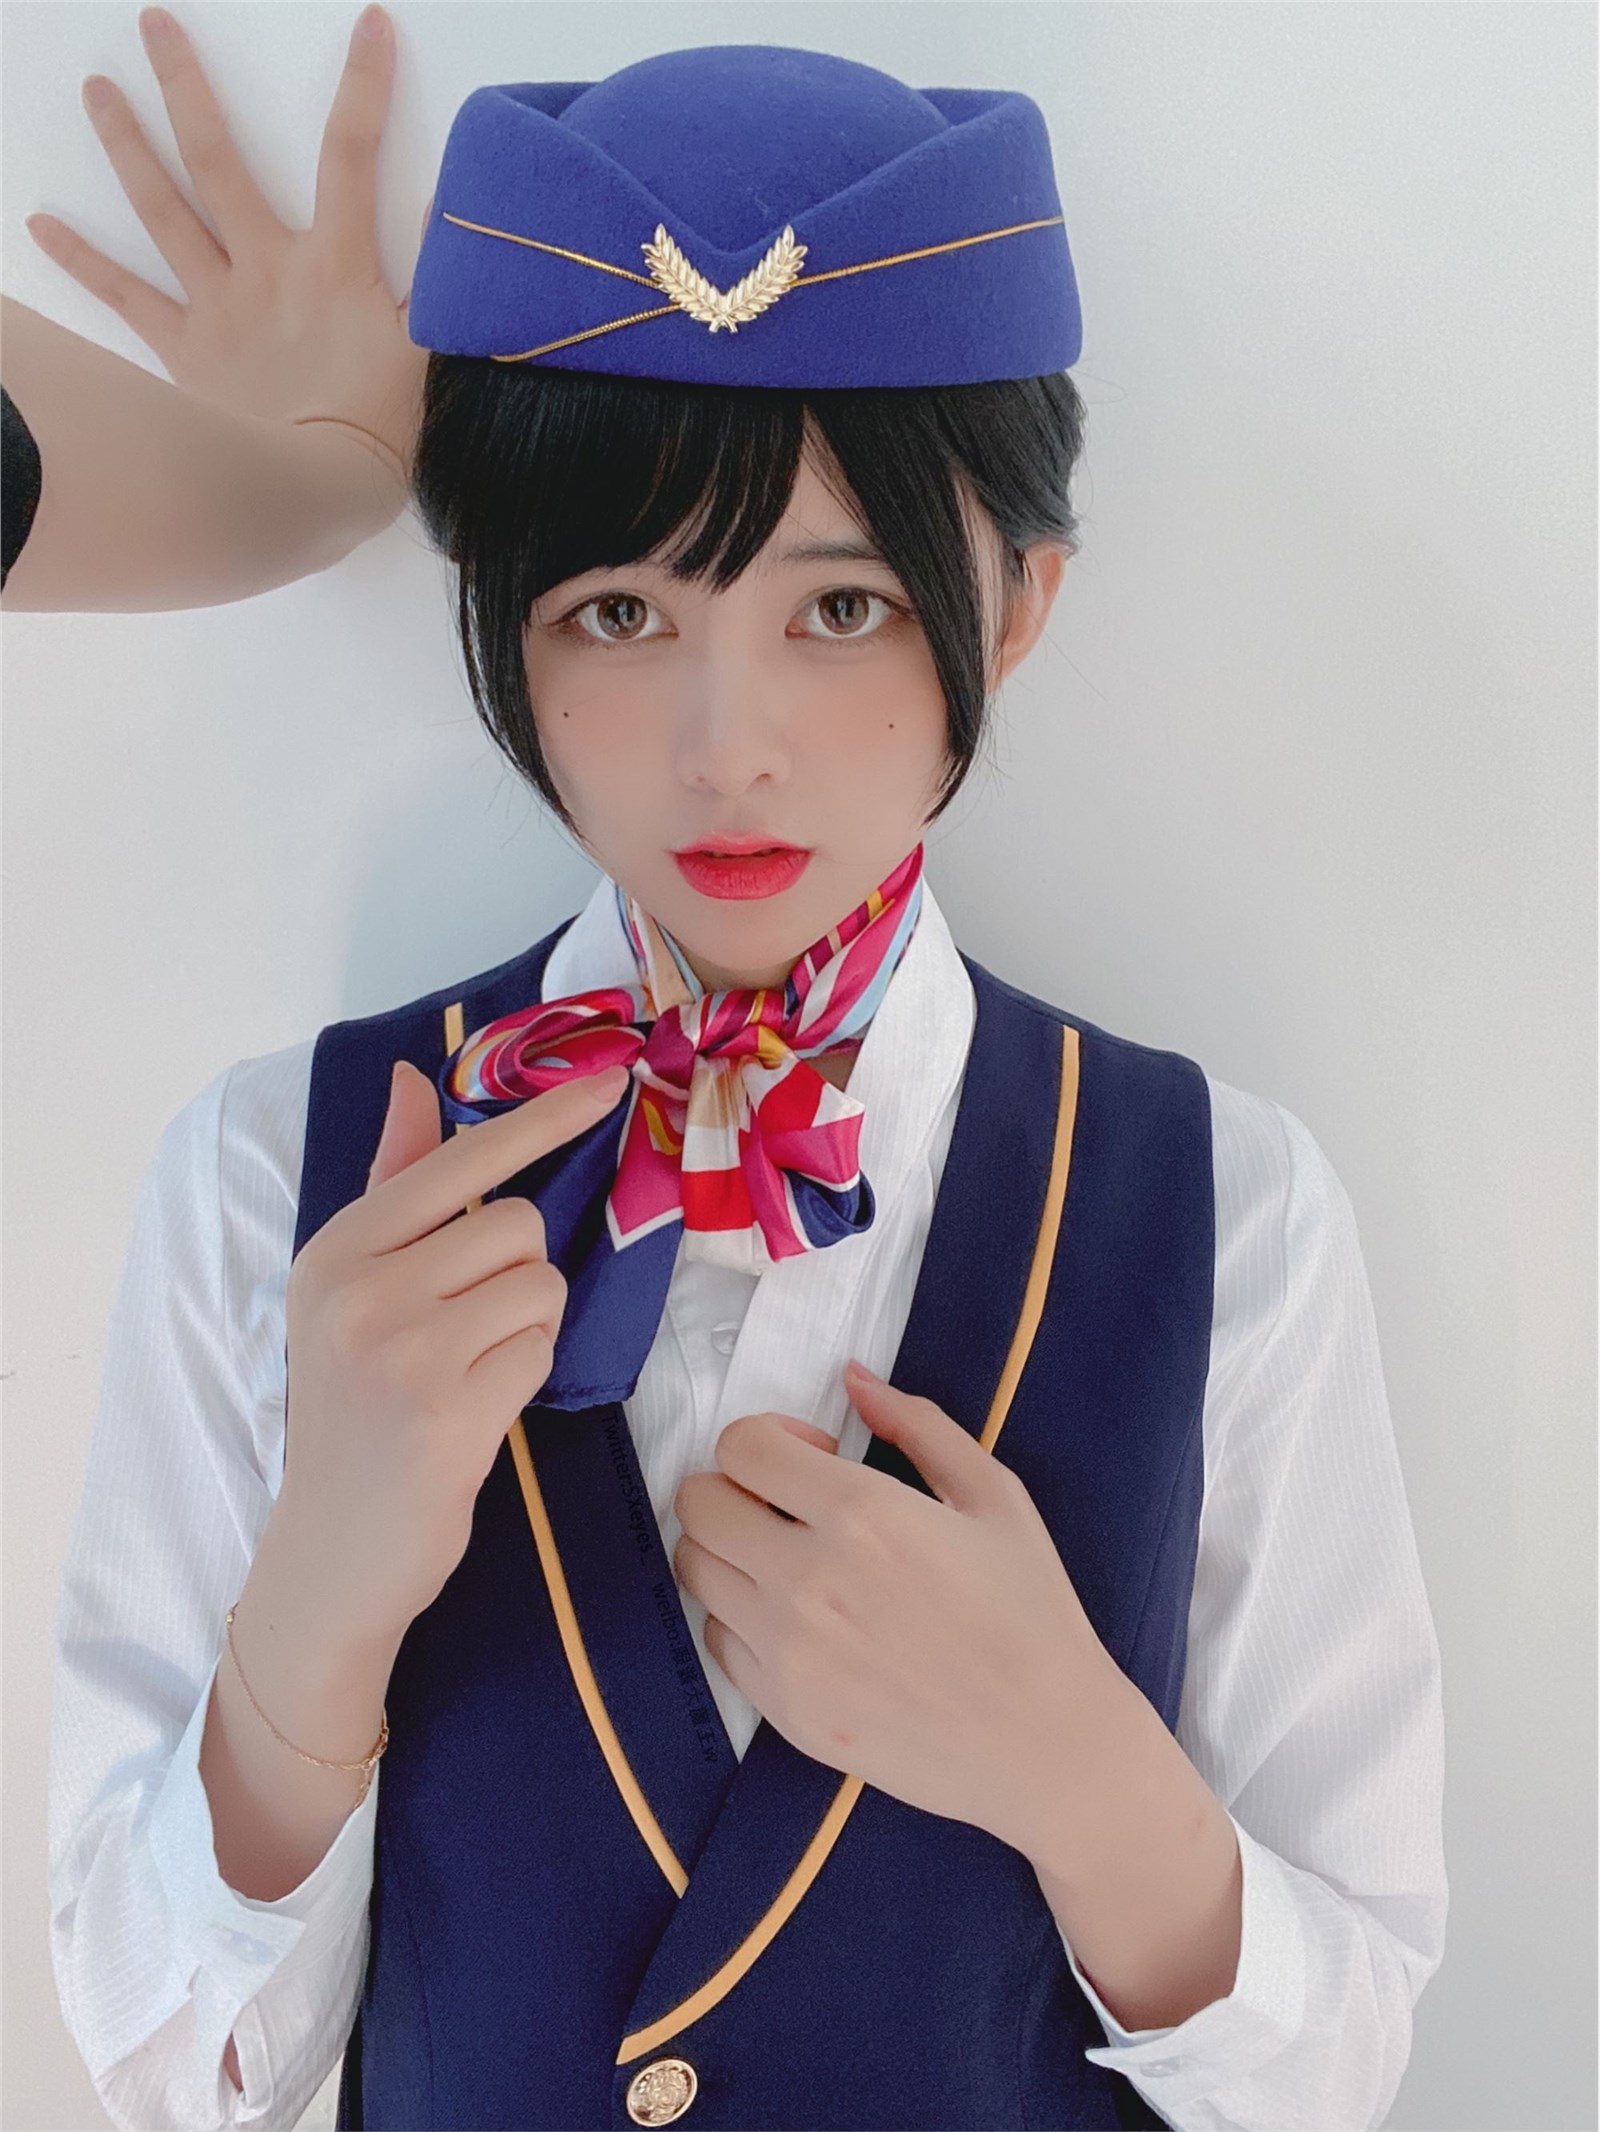 Air hostess uniform(1)